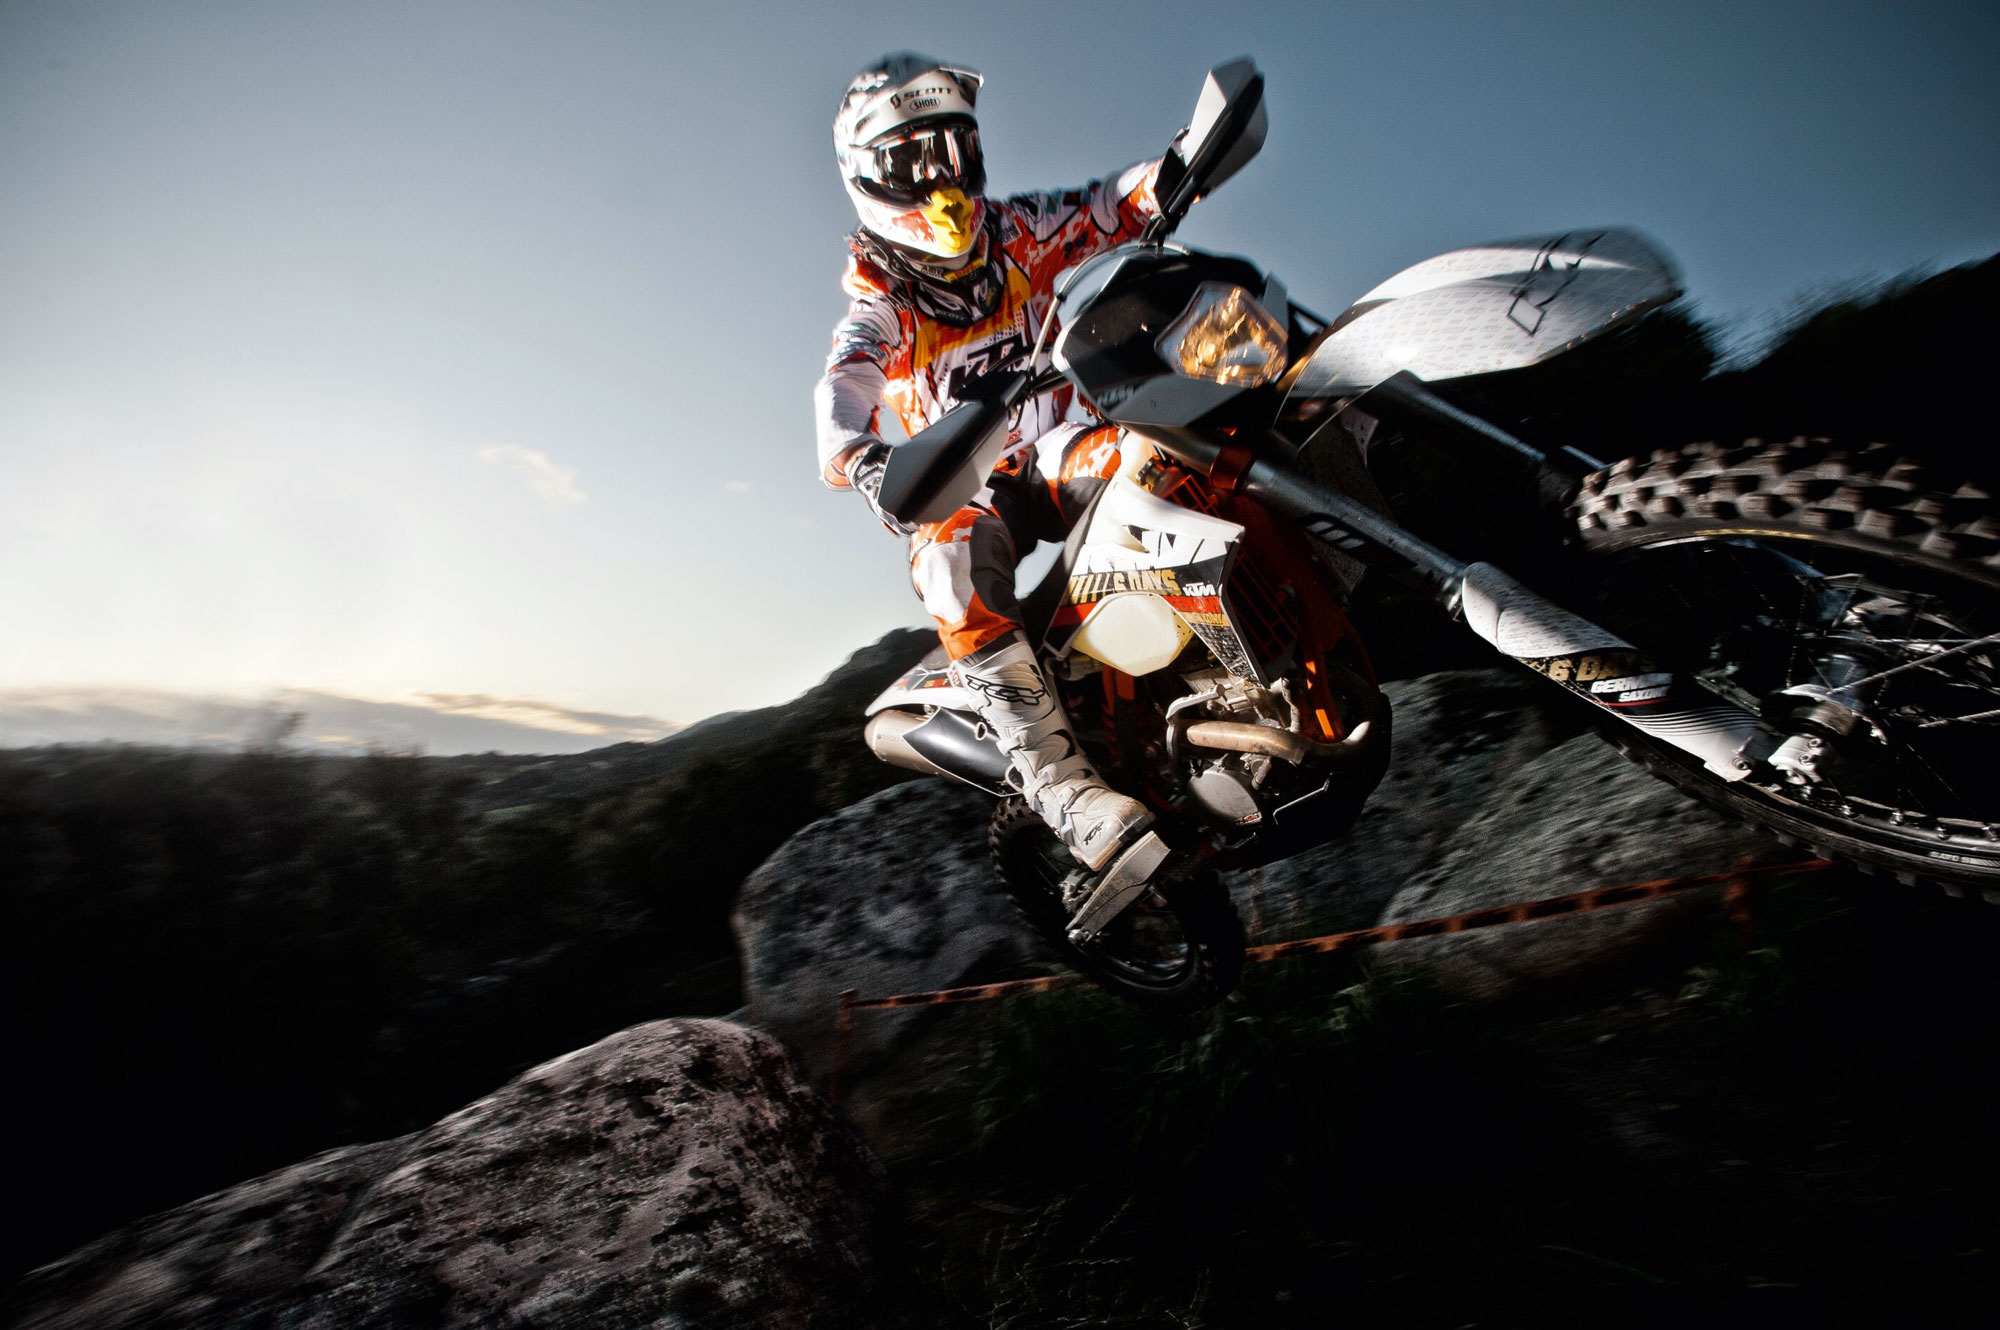 Motocross Ktm Backgrounds Download Free Pixelstalknet